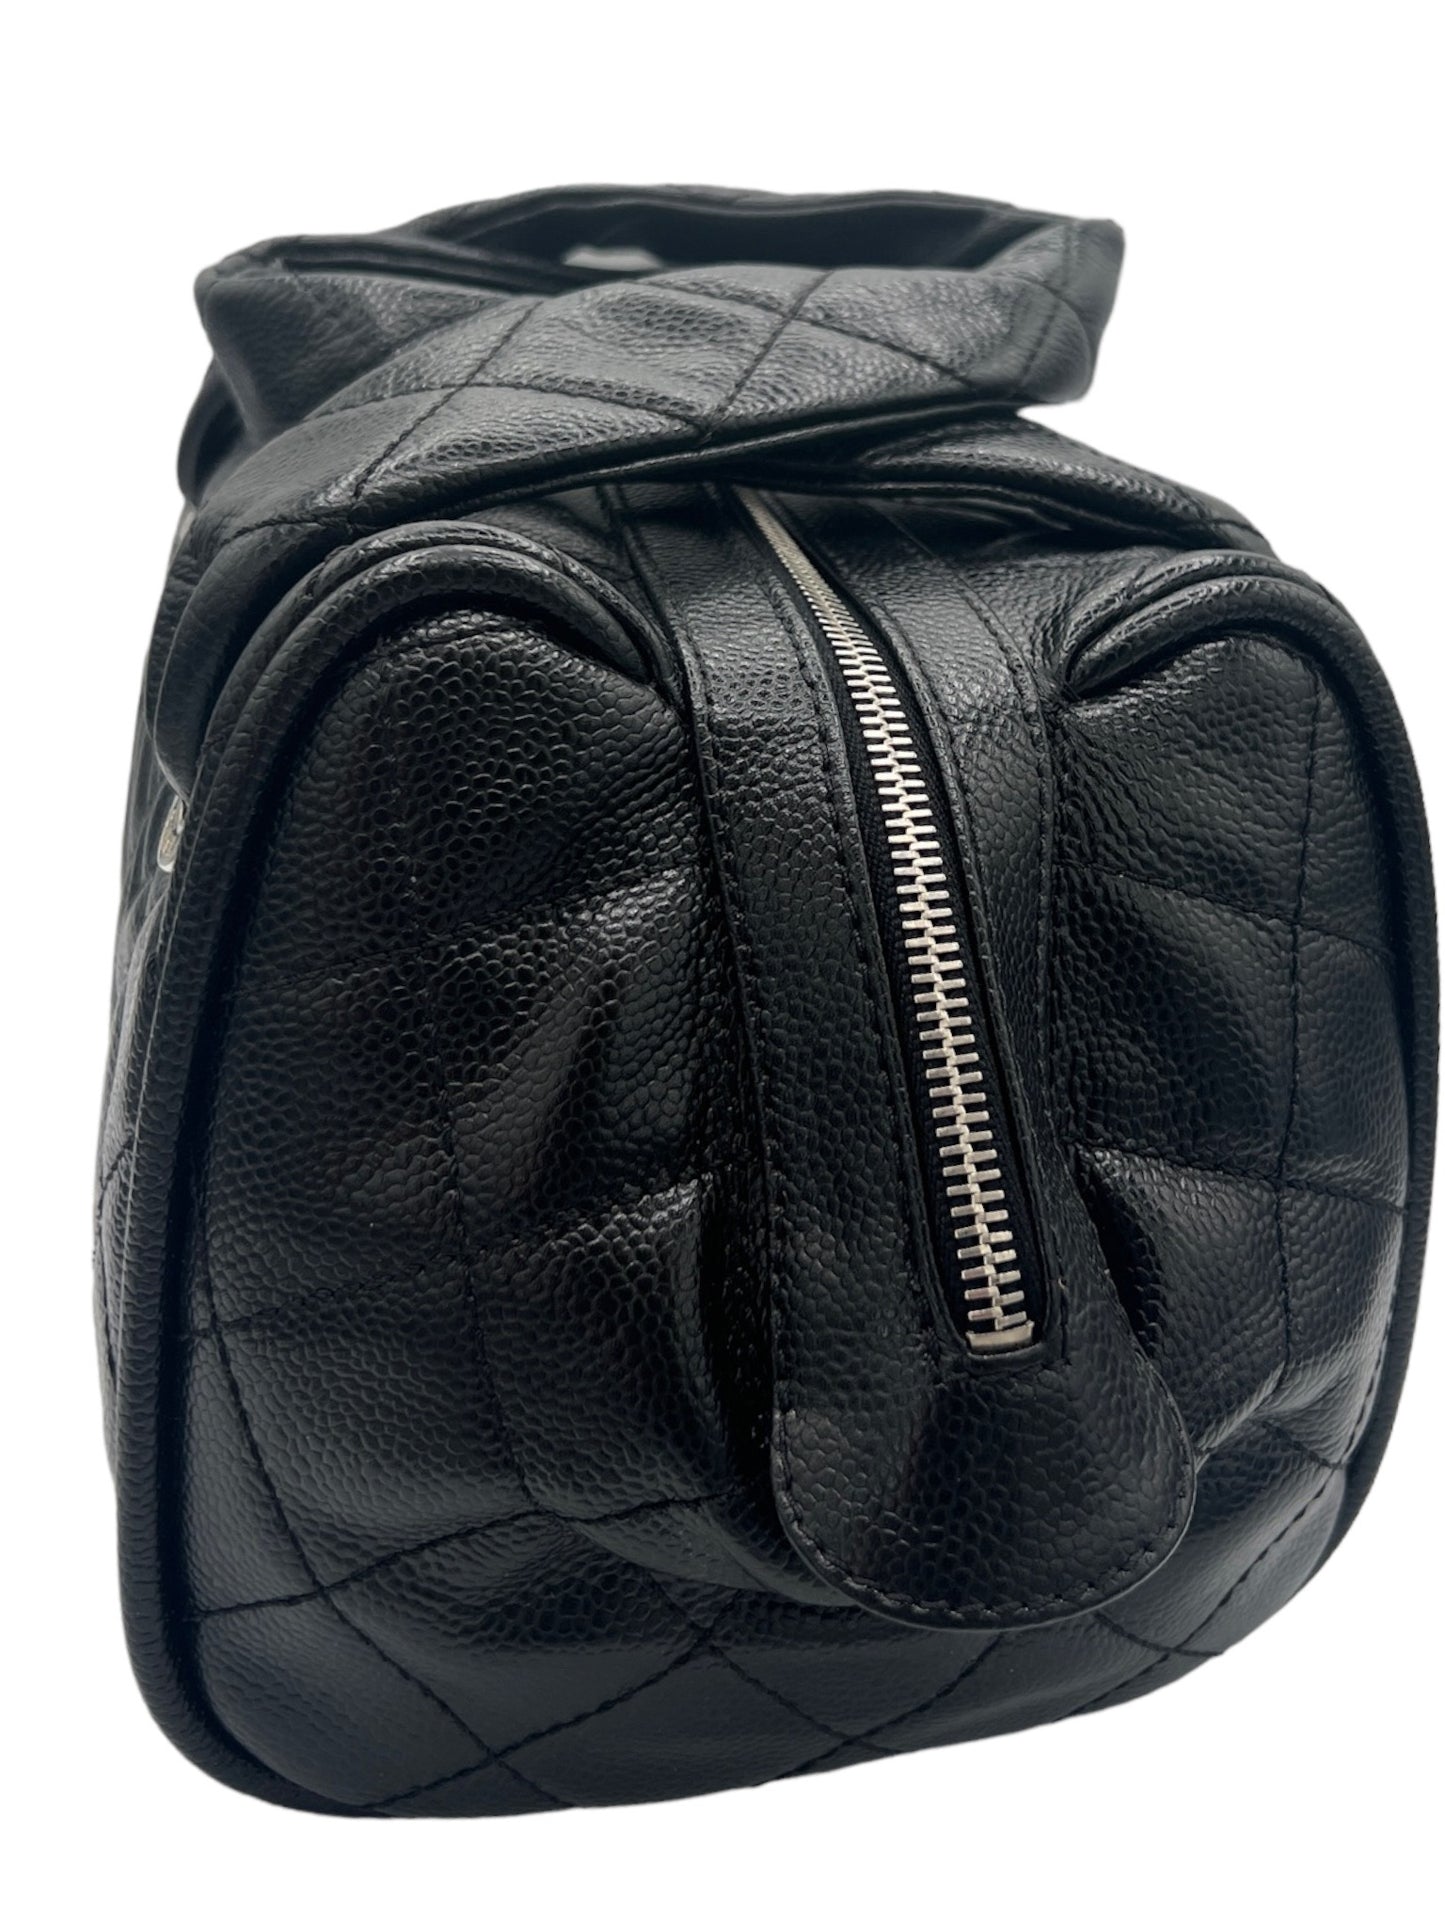 CHANEL - Bowling Bag Black Leather